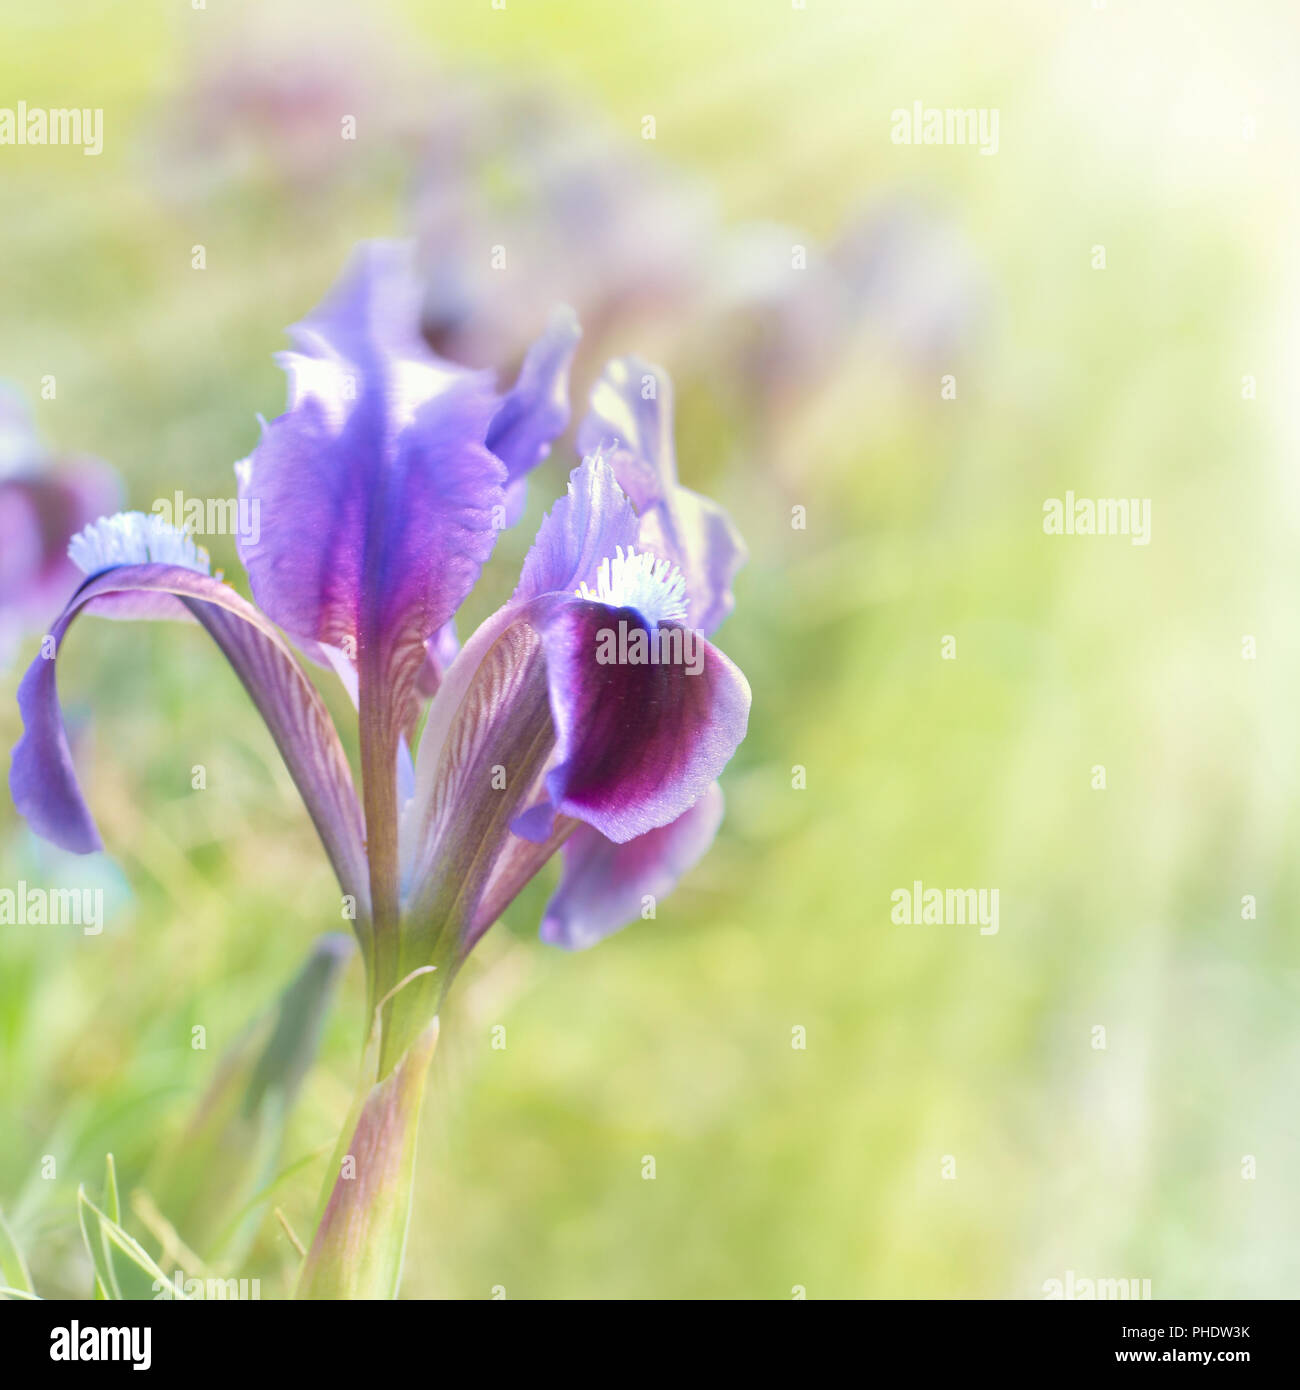 Flower iris on the green lawn Stock Photo